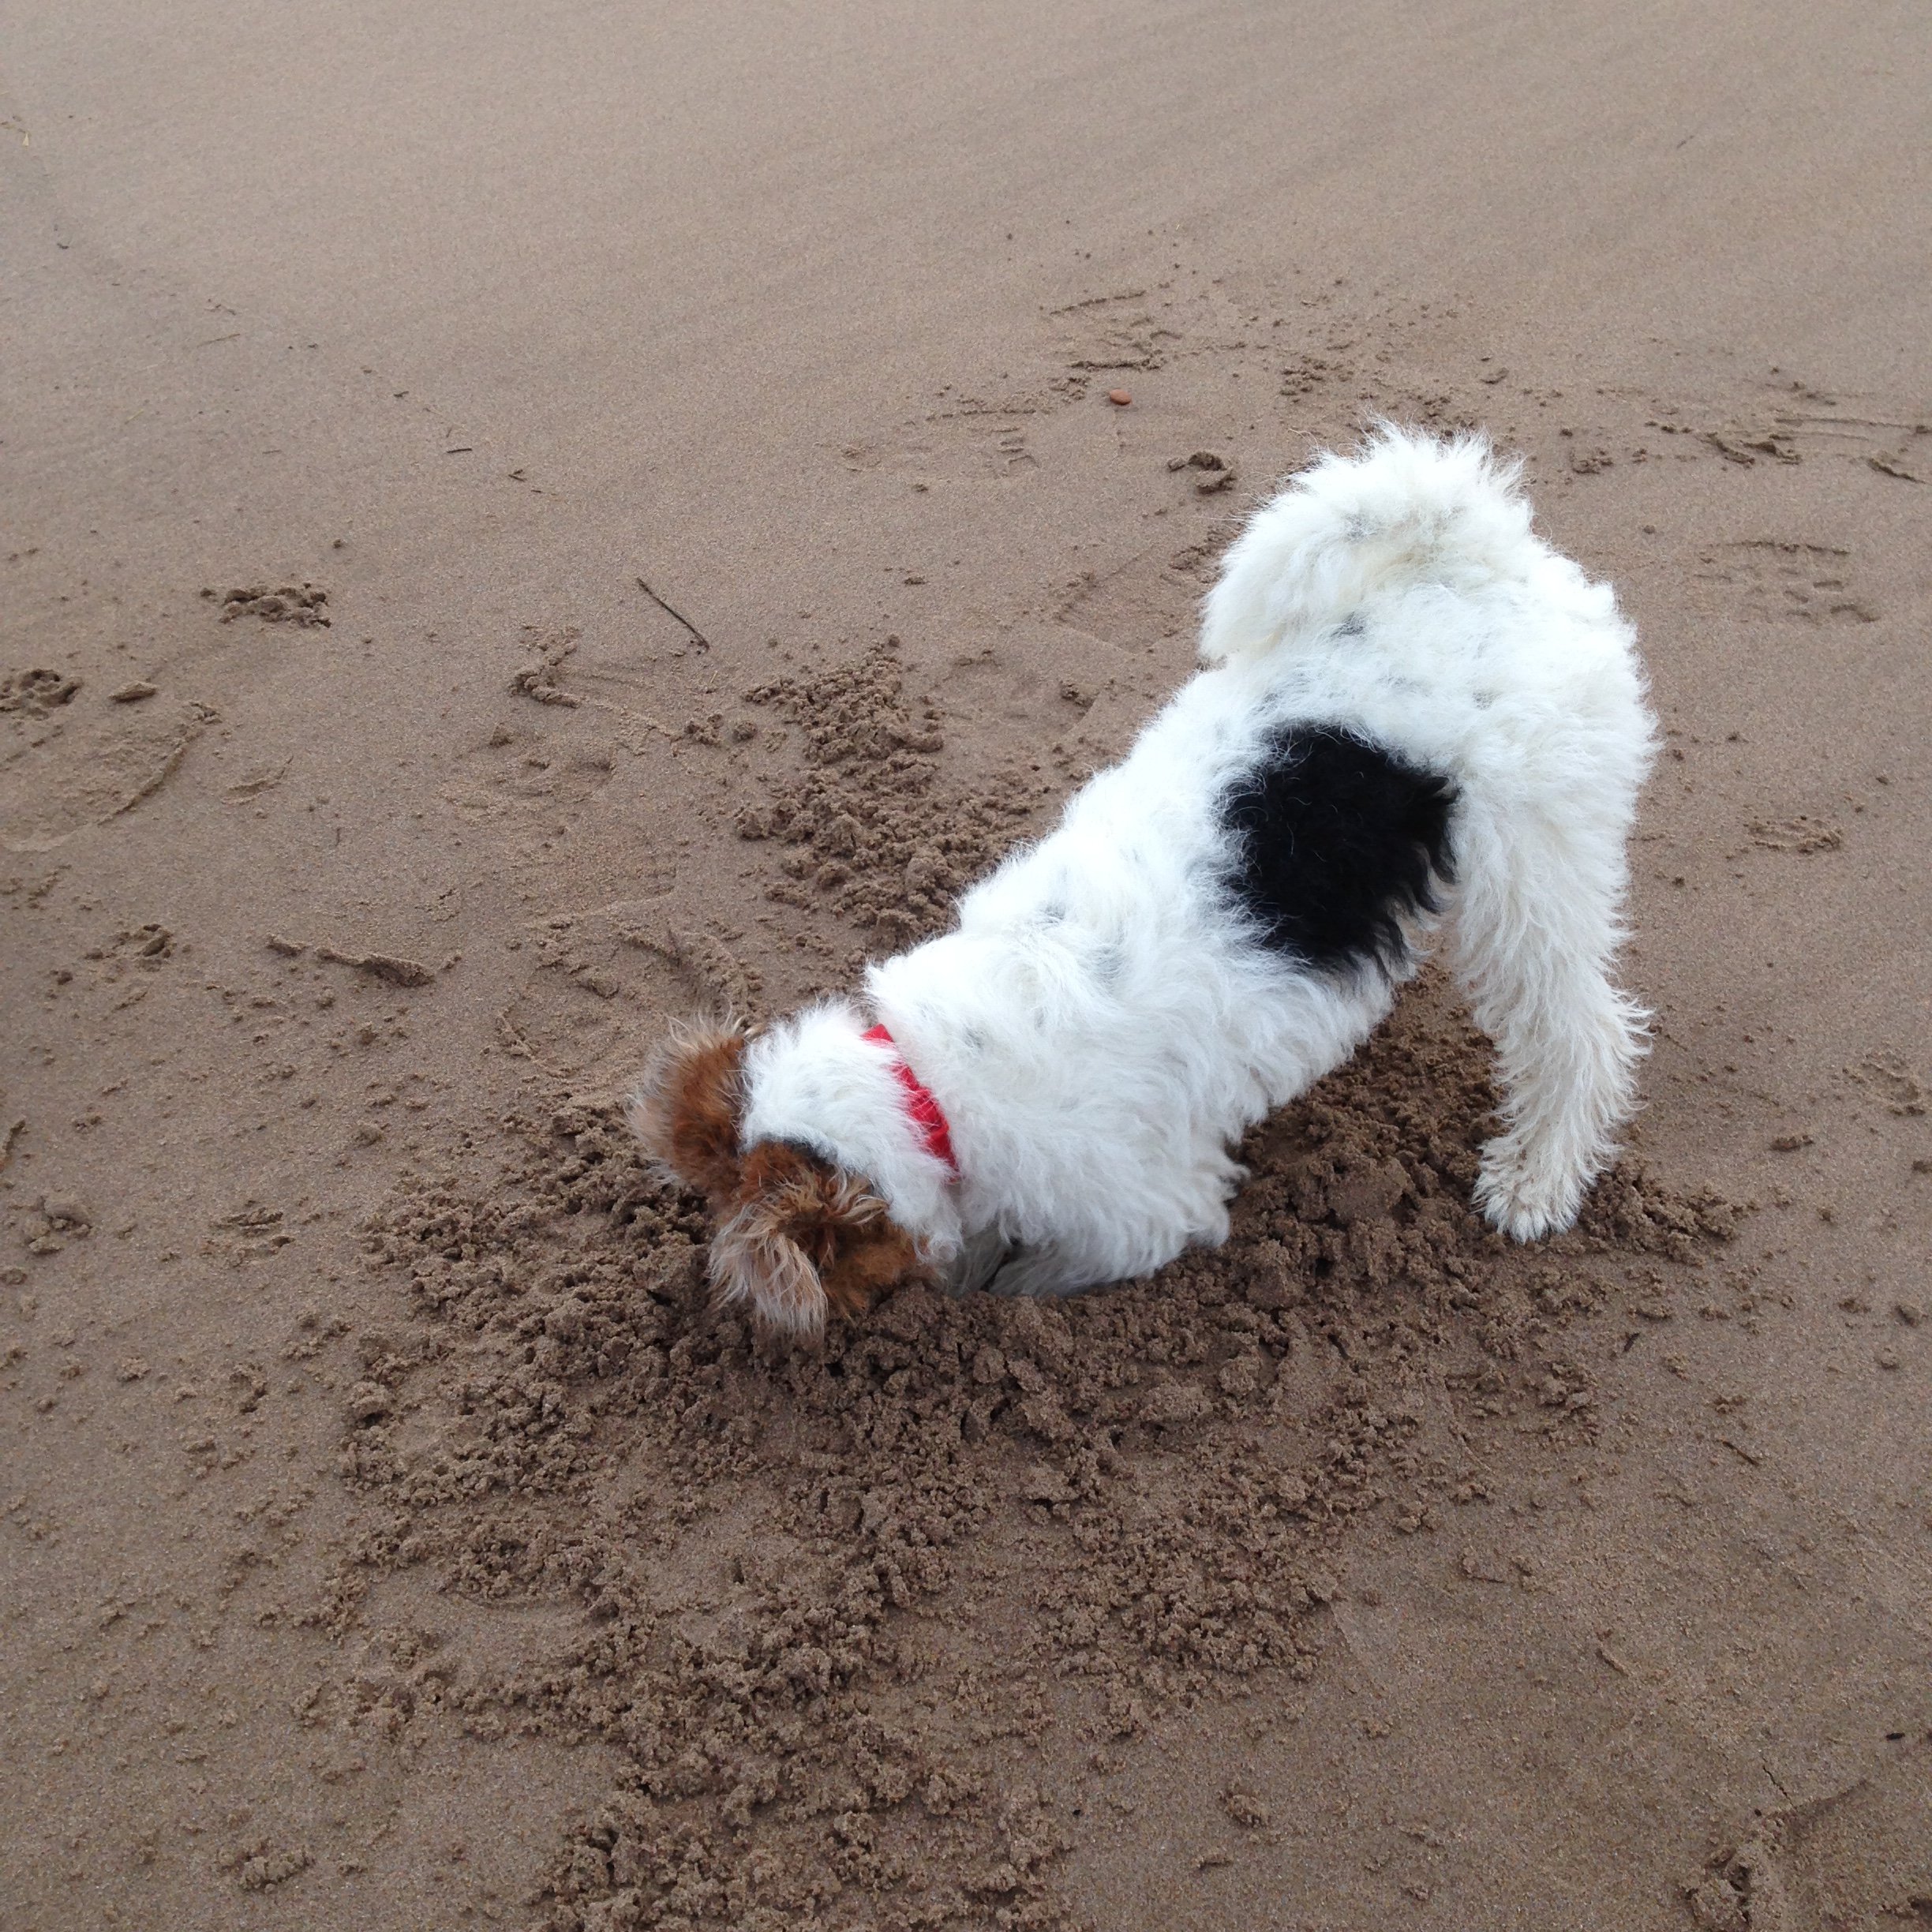 Digging at the seaside!